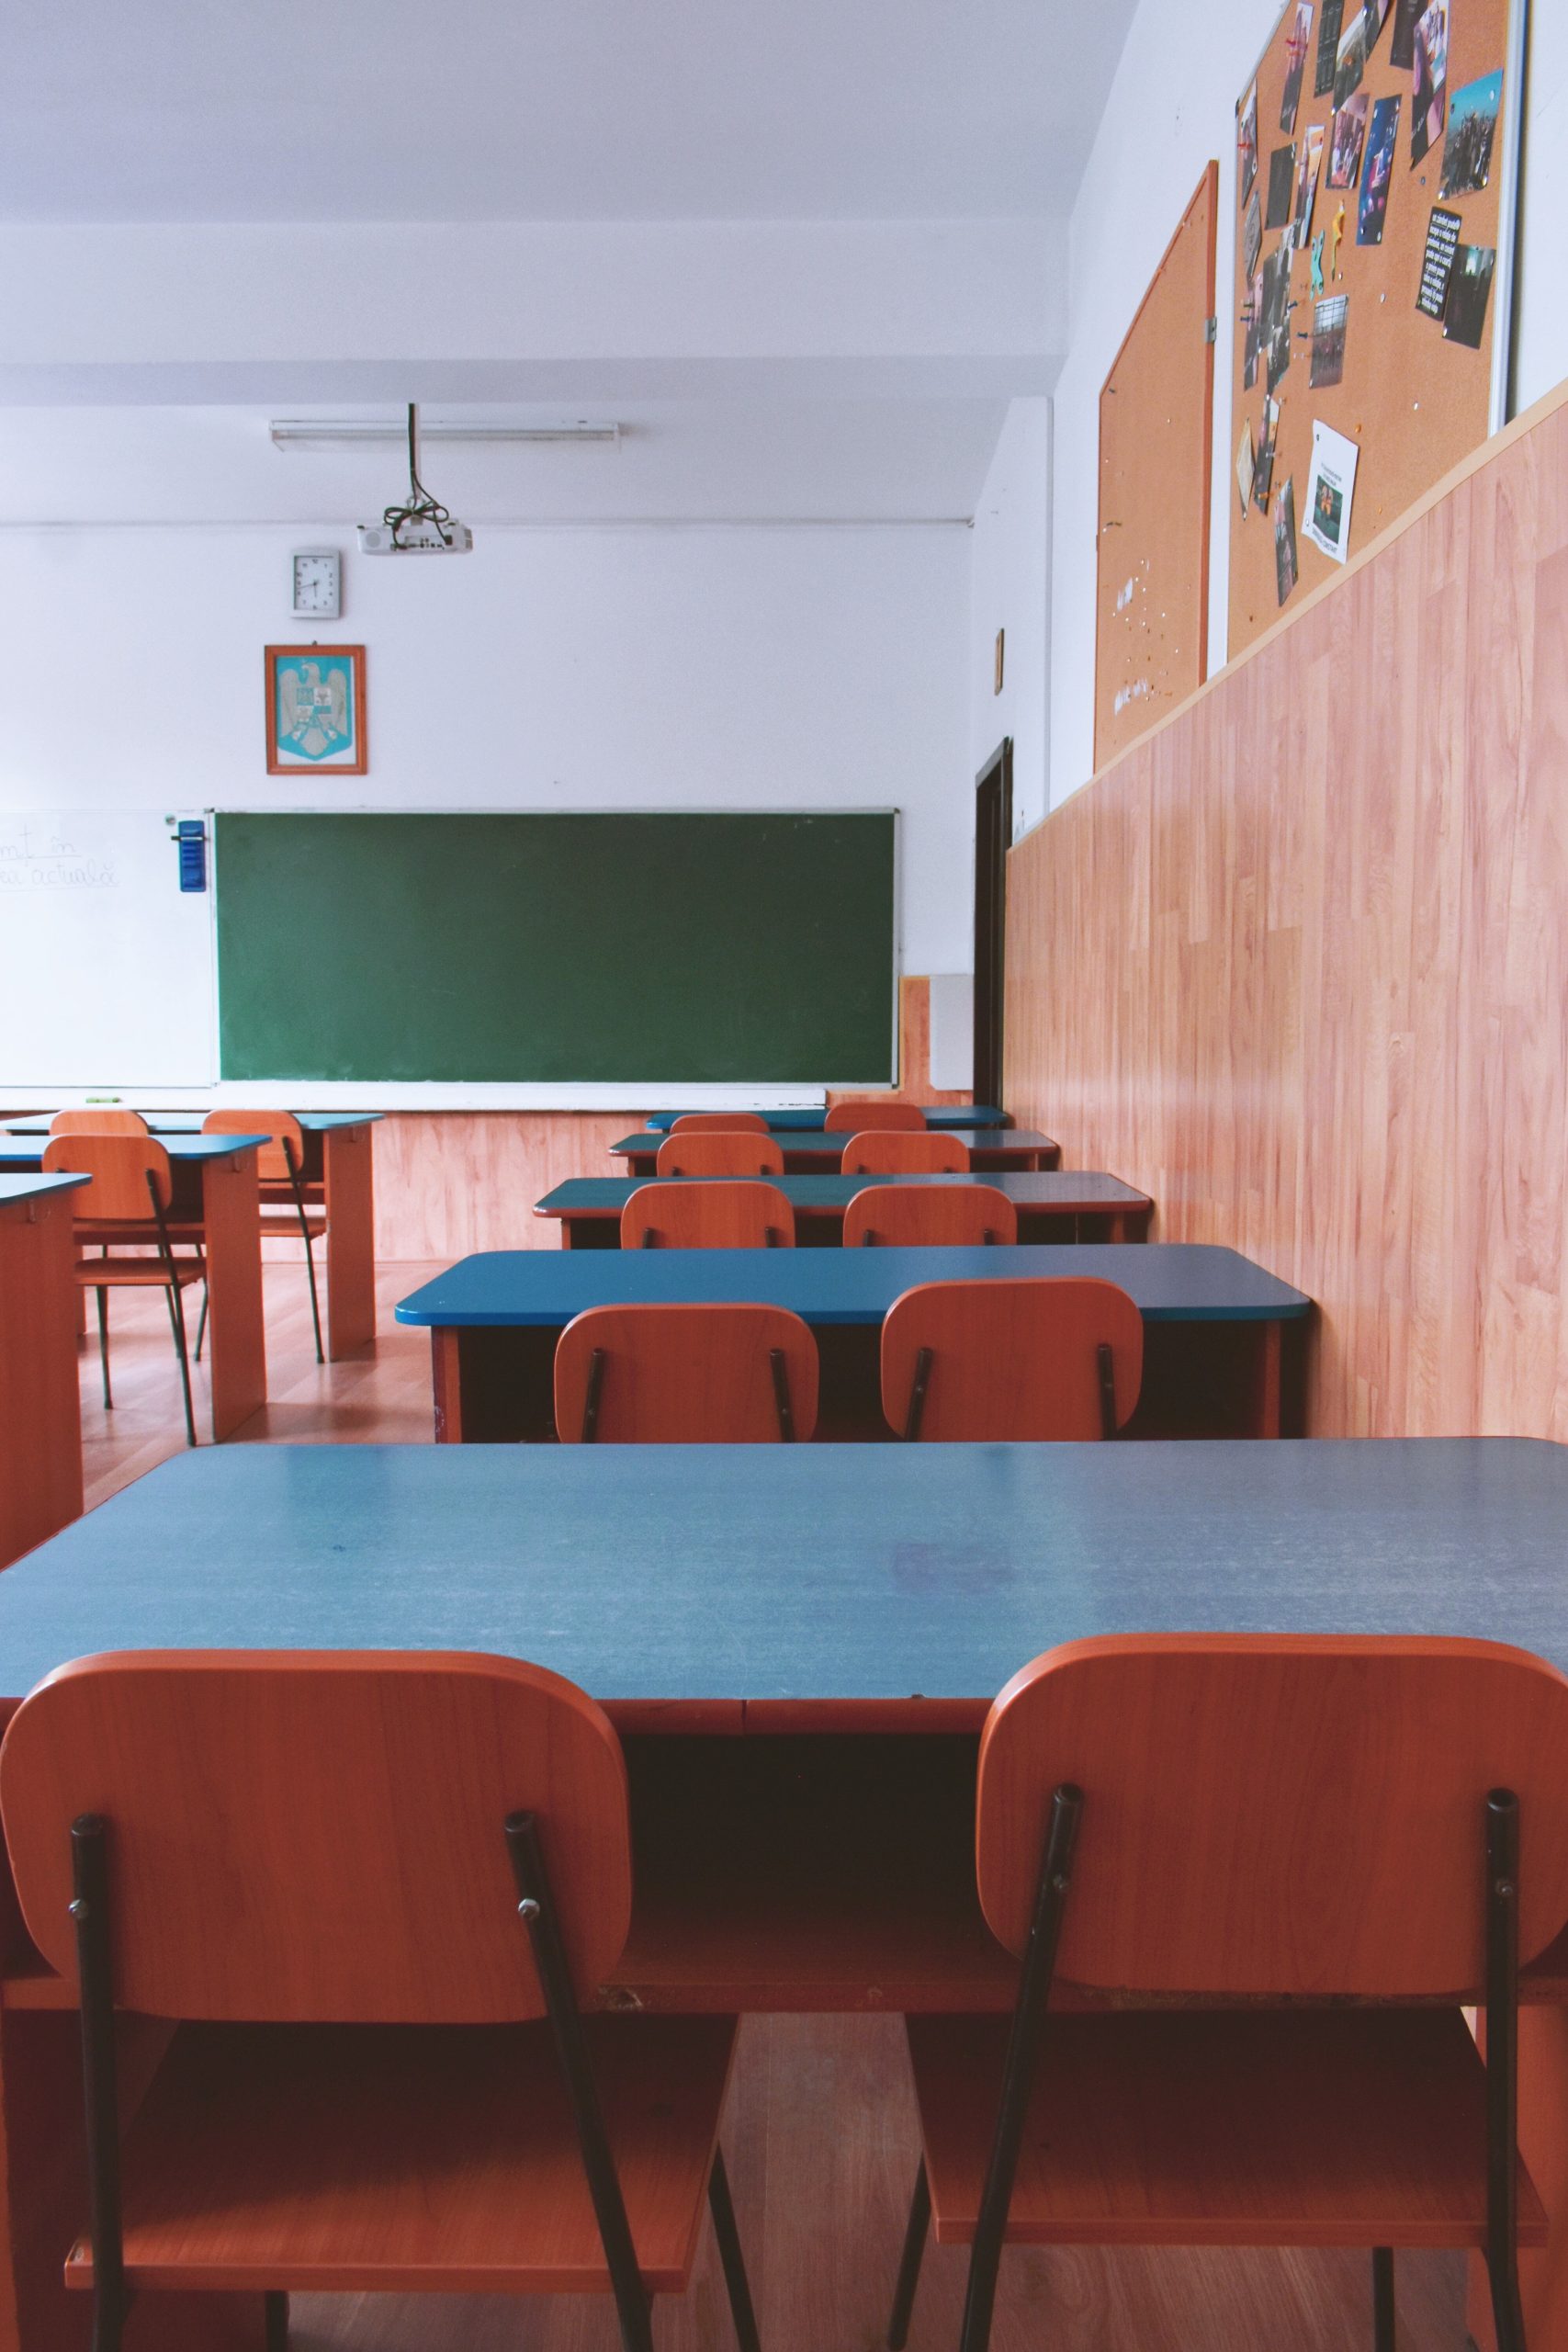 Teacher change of career - the empty classroom